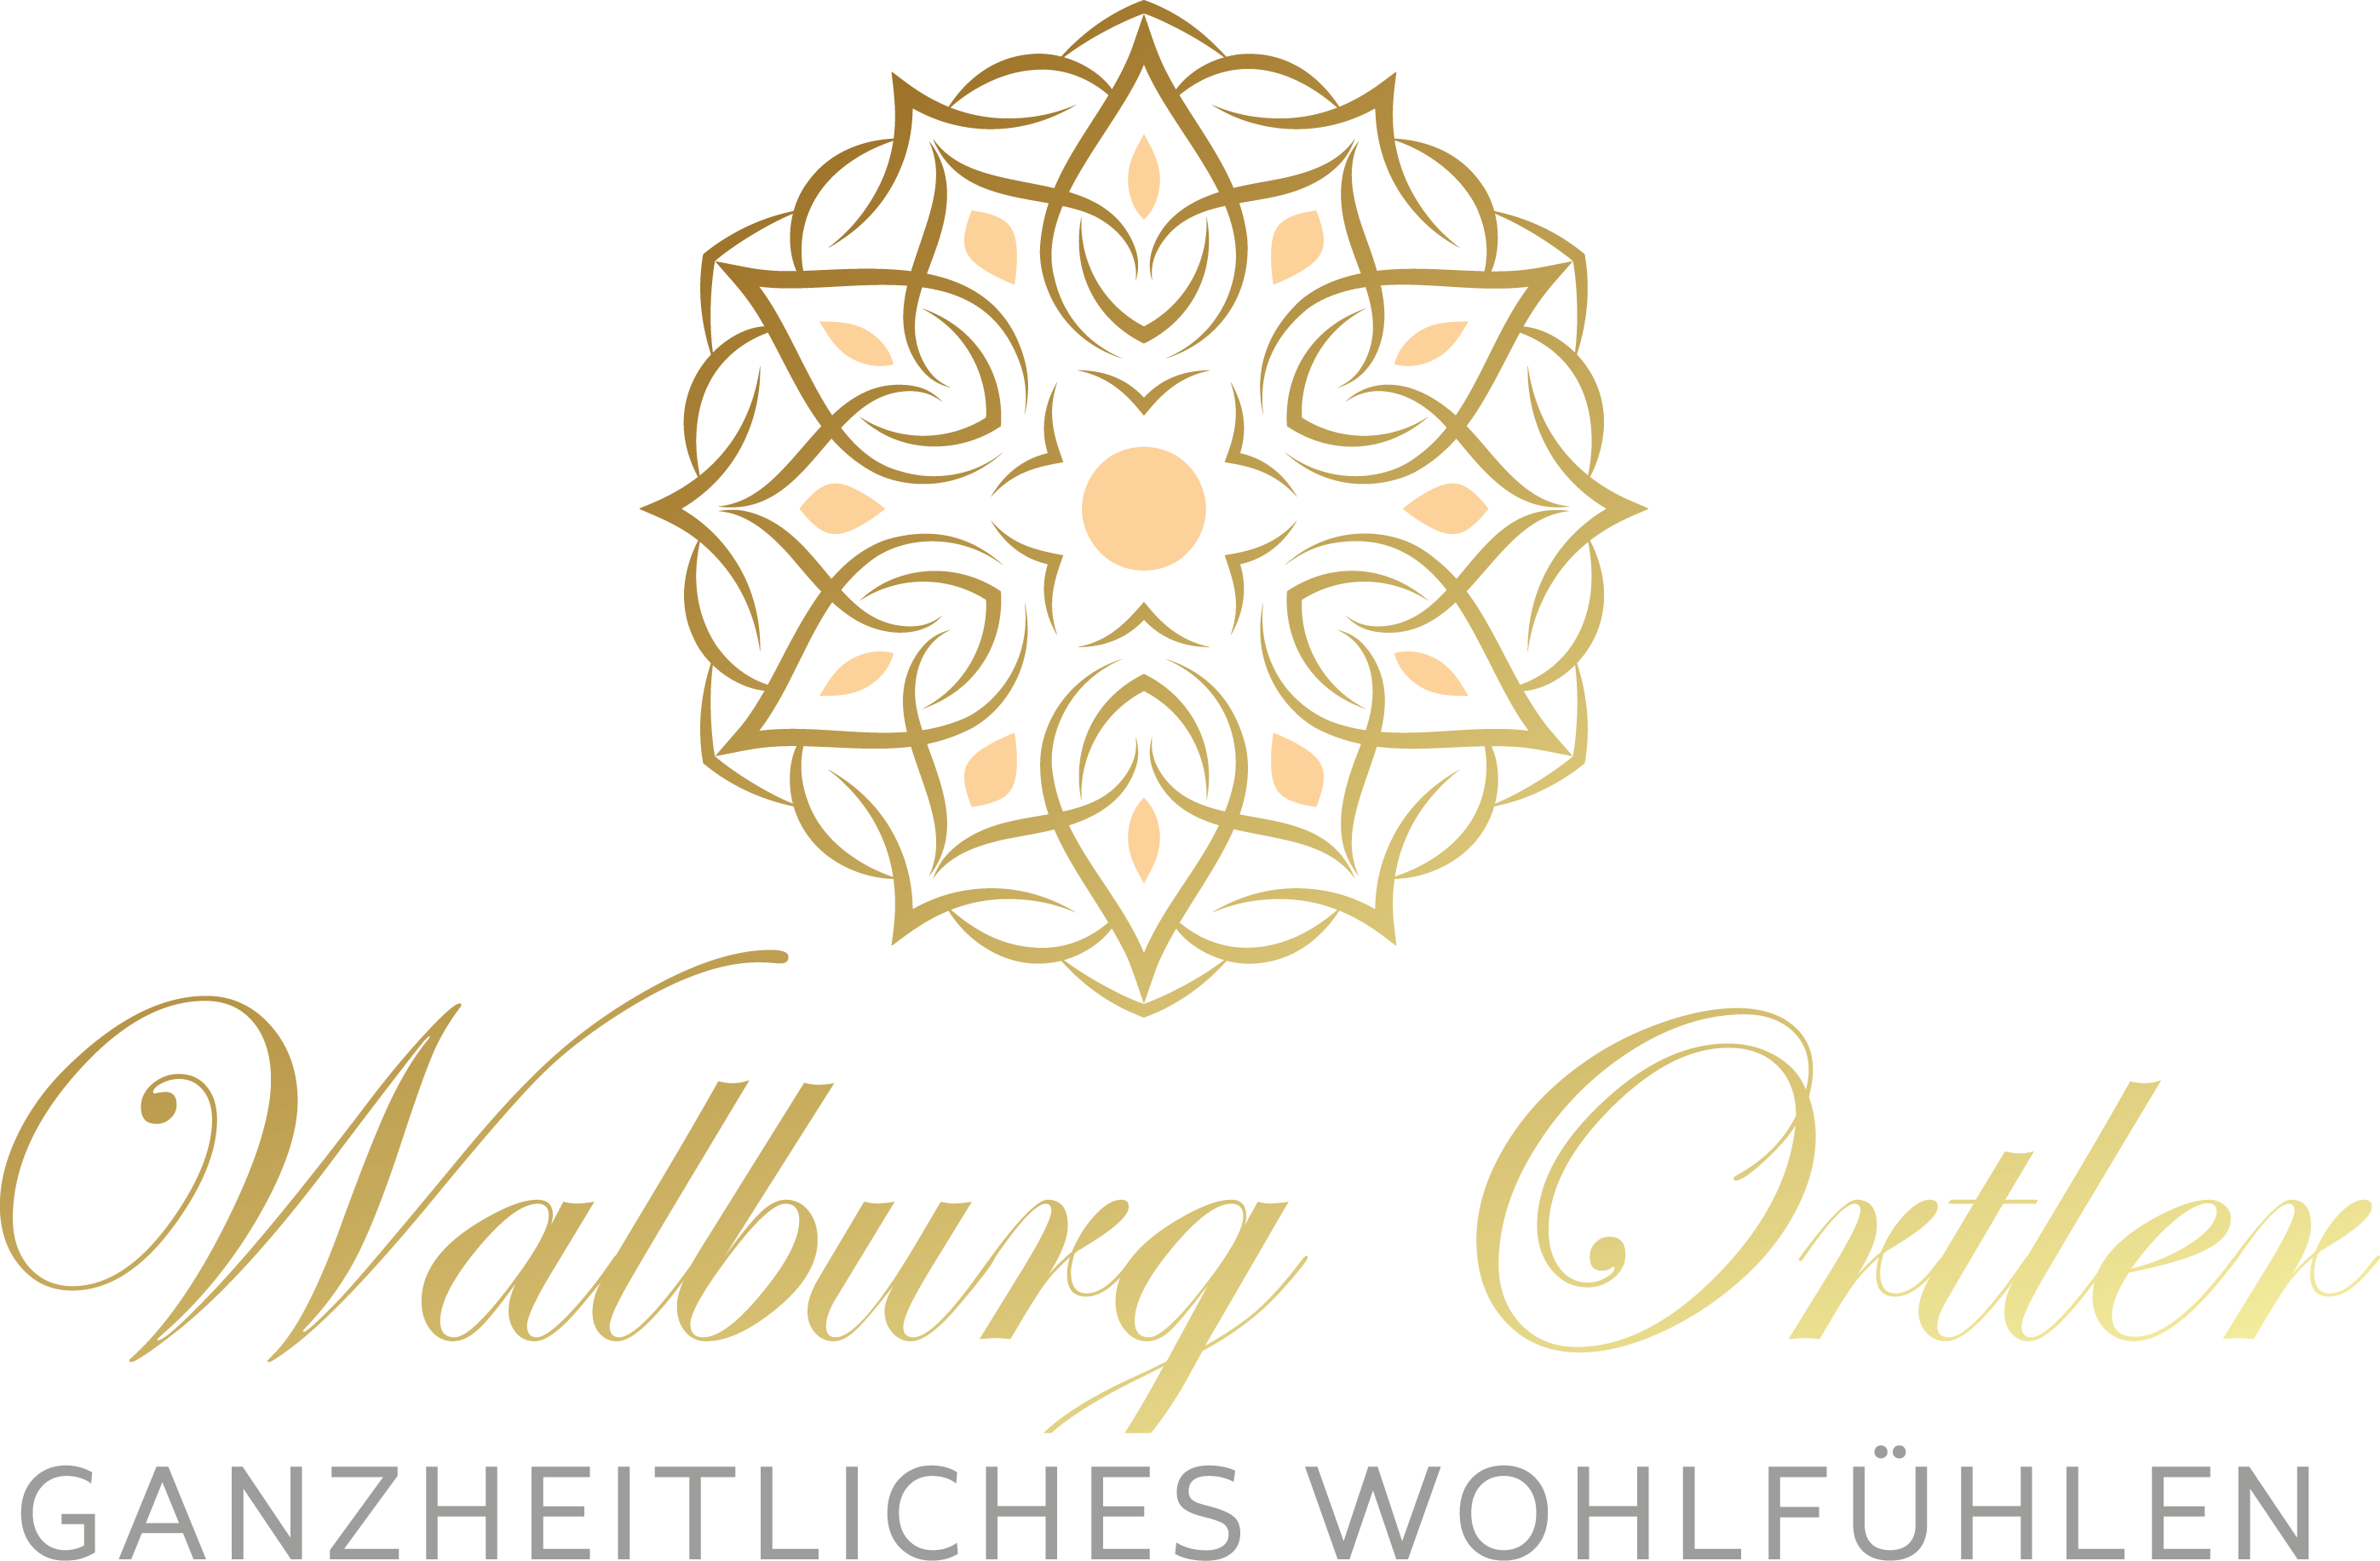 Walburg Ortler